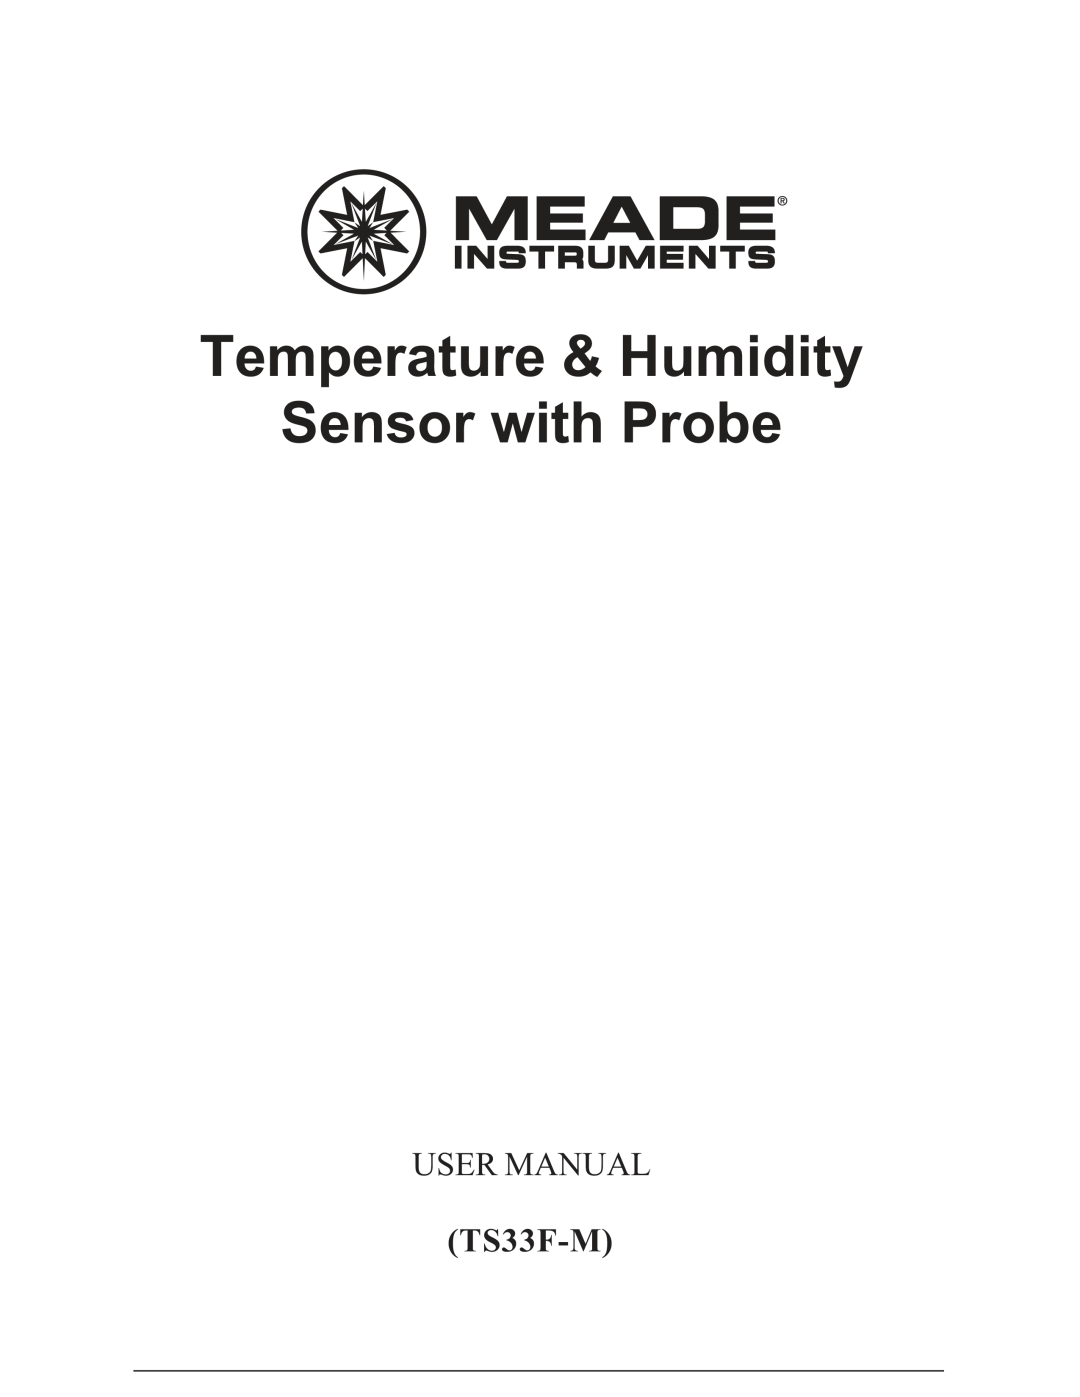 Meade TS33F-M user manual Temperature & Humidity Sensor with Probe, User Manual 